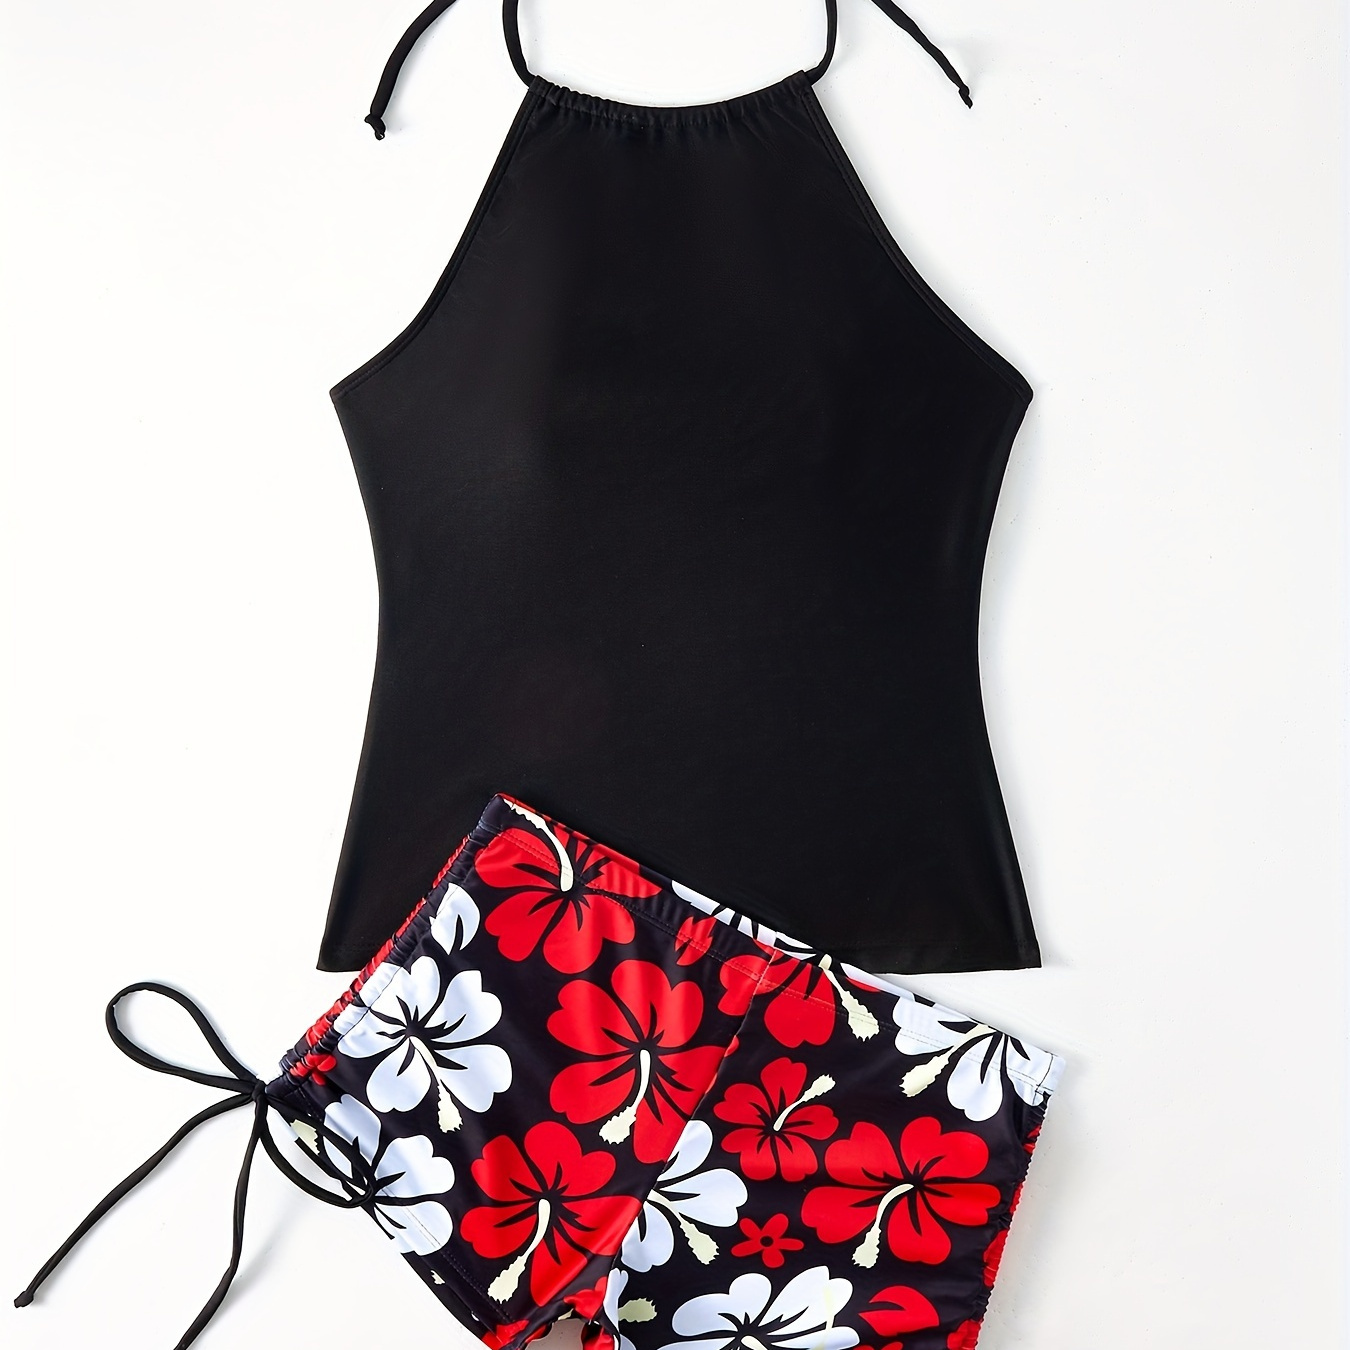 

Women's Fashion Halter Neck Tankini Set, Floral Print, Vacay Style, Two-piece Swimsuit, Beachwear